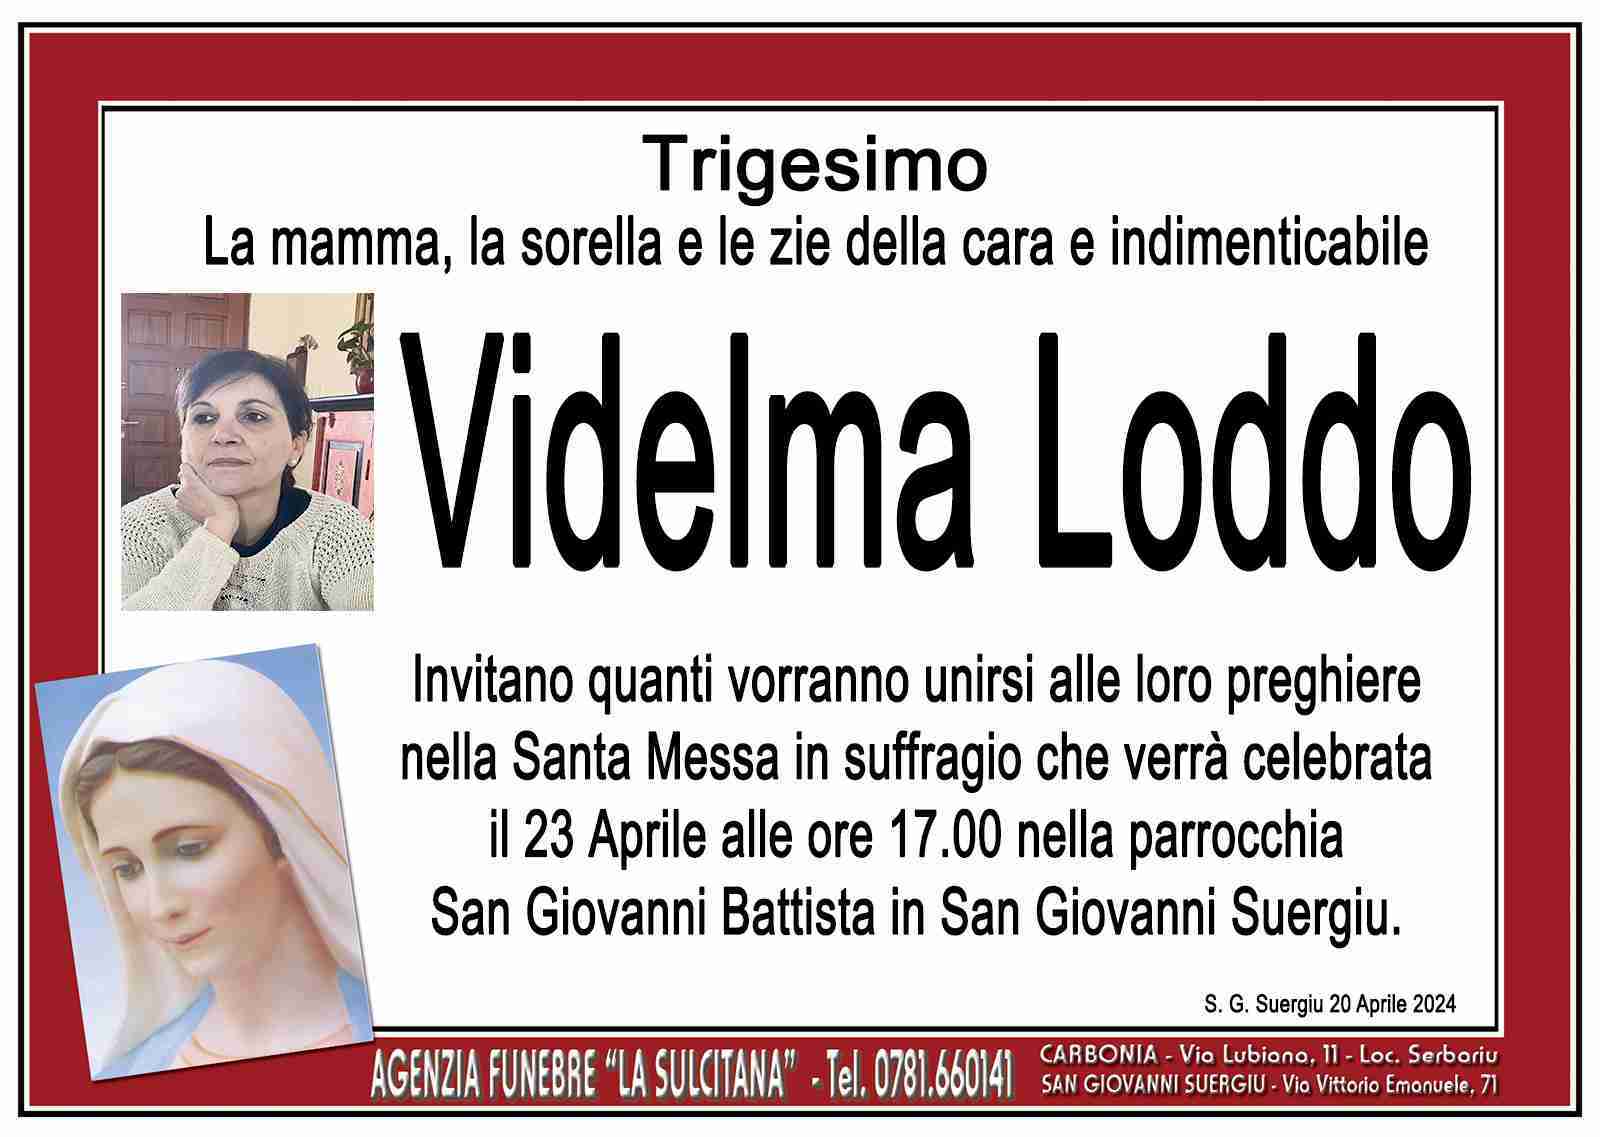 Videlma Loddo